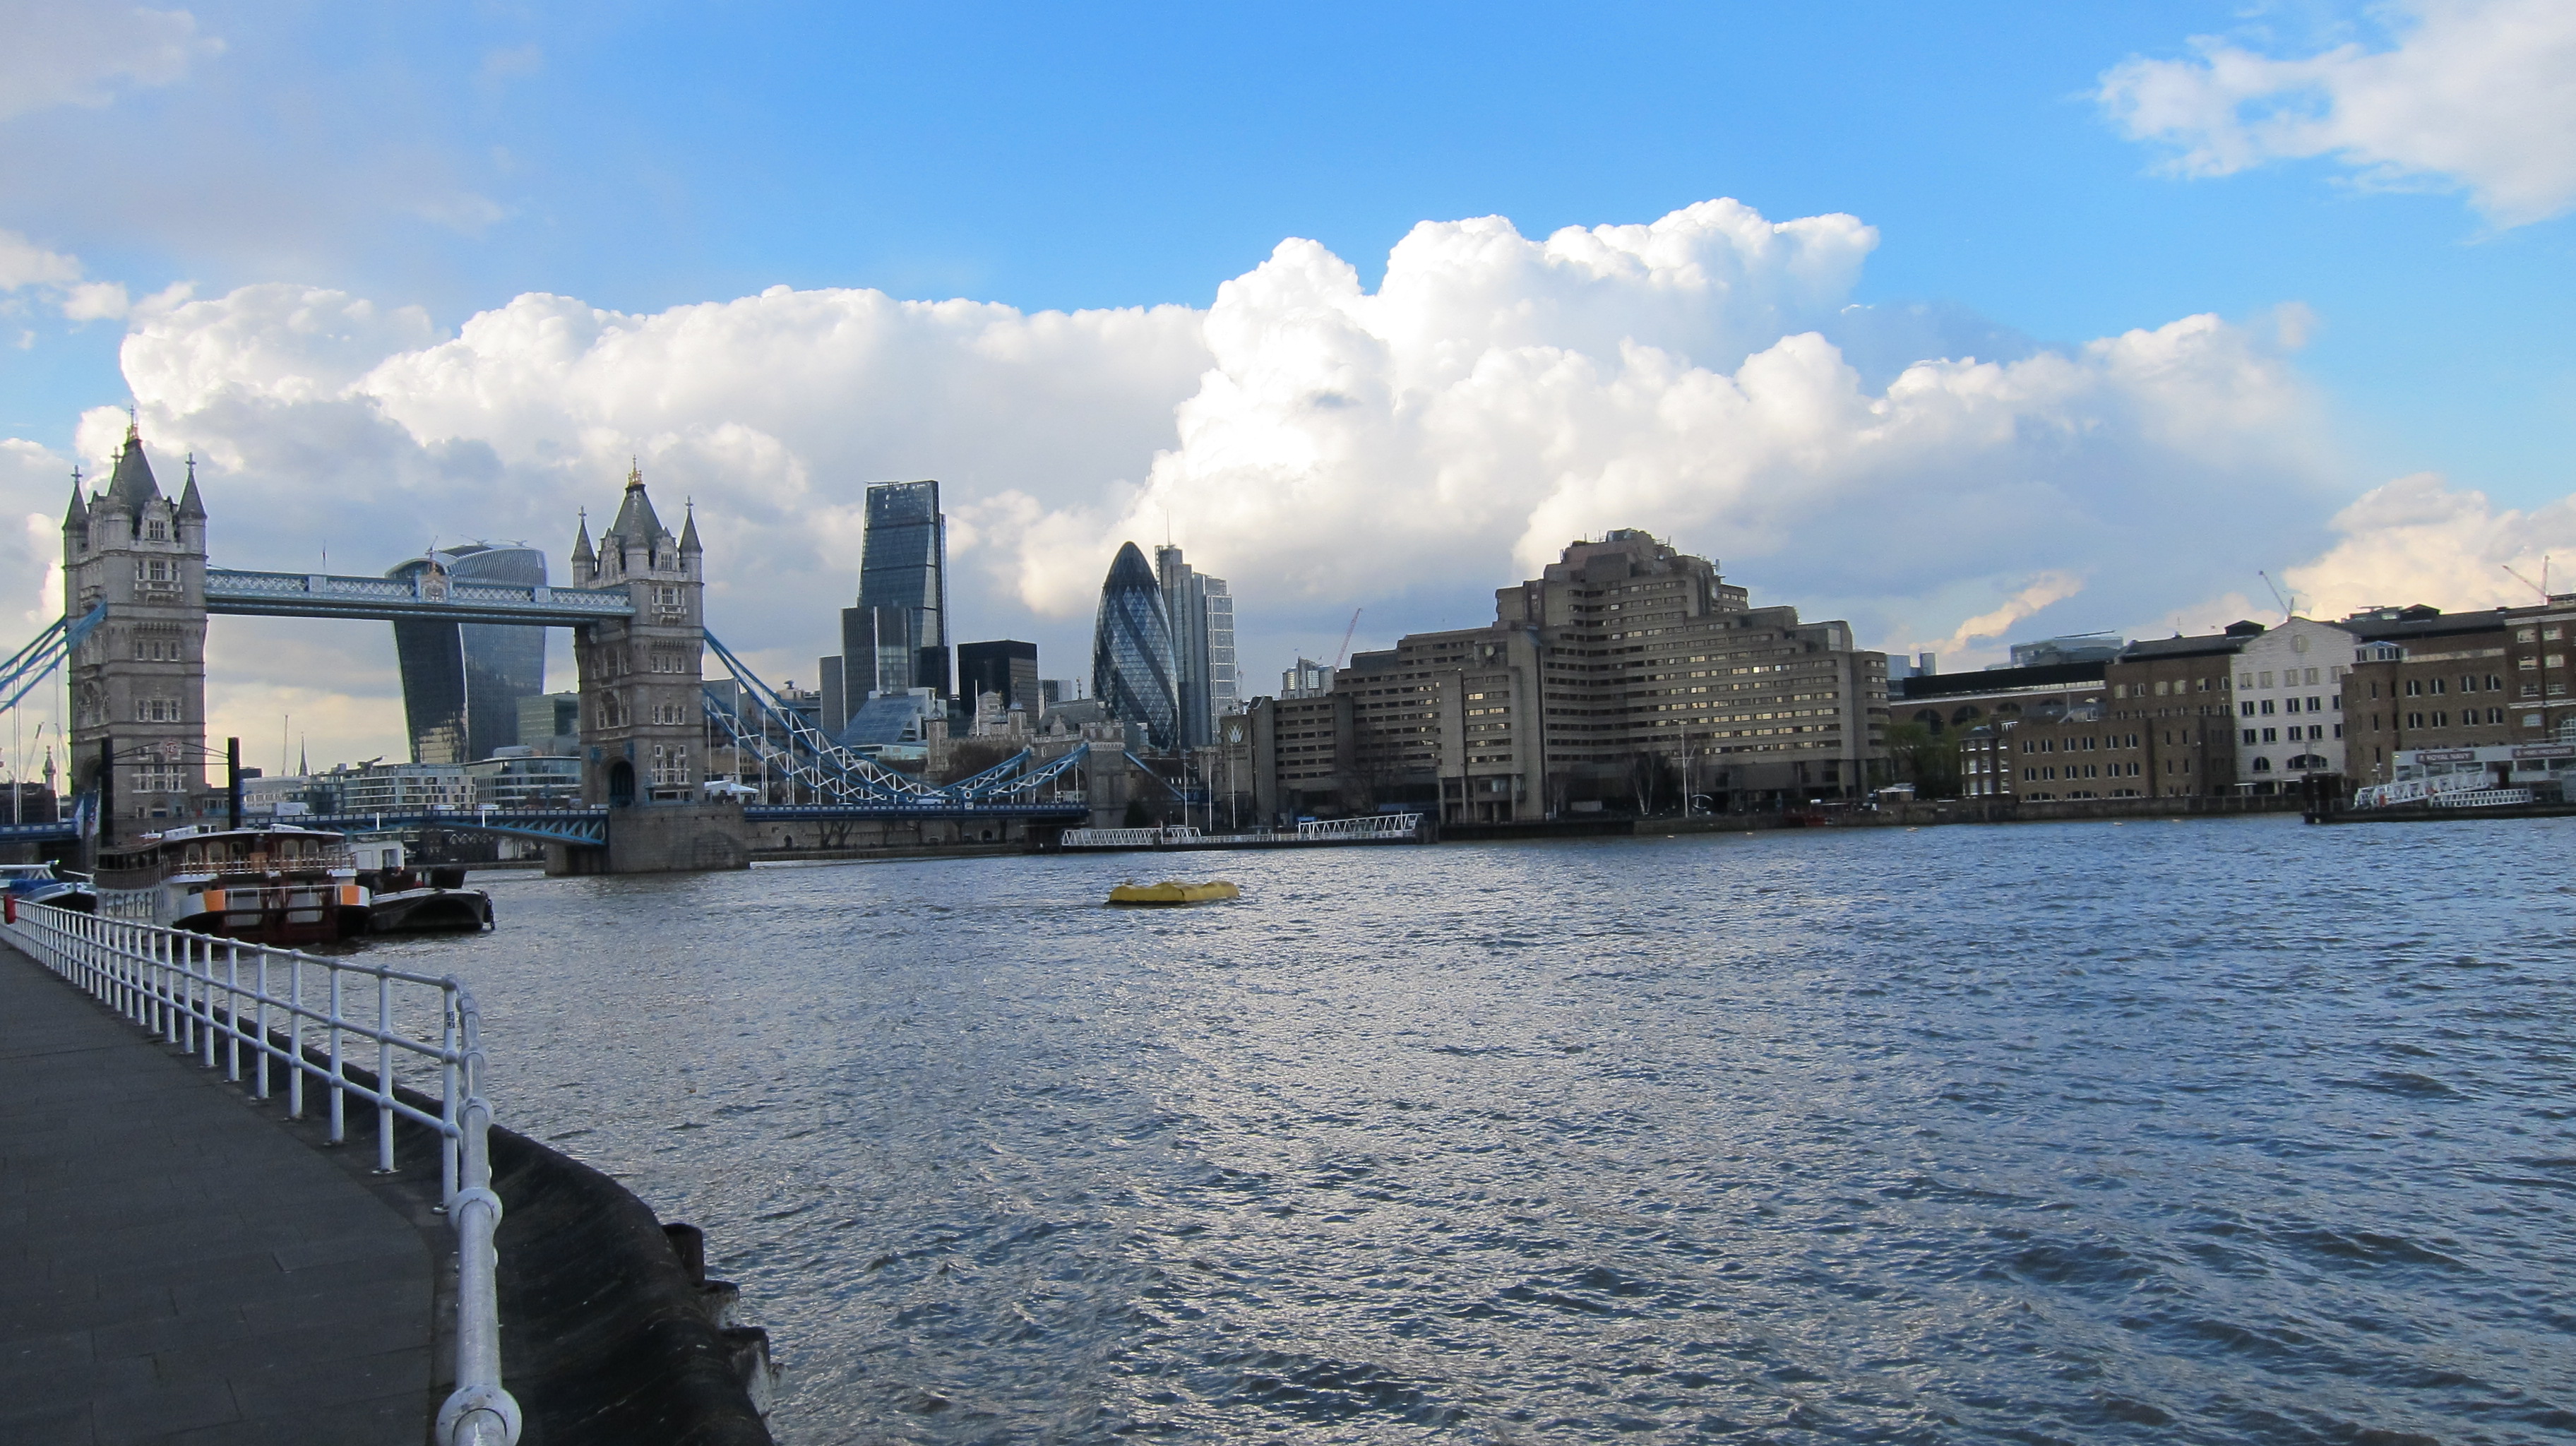 Thames River, London - panoramio.jpg.